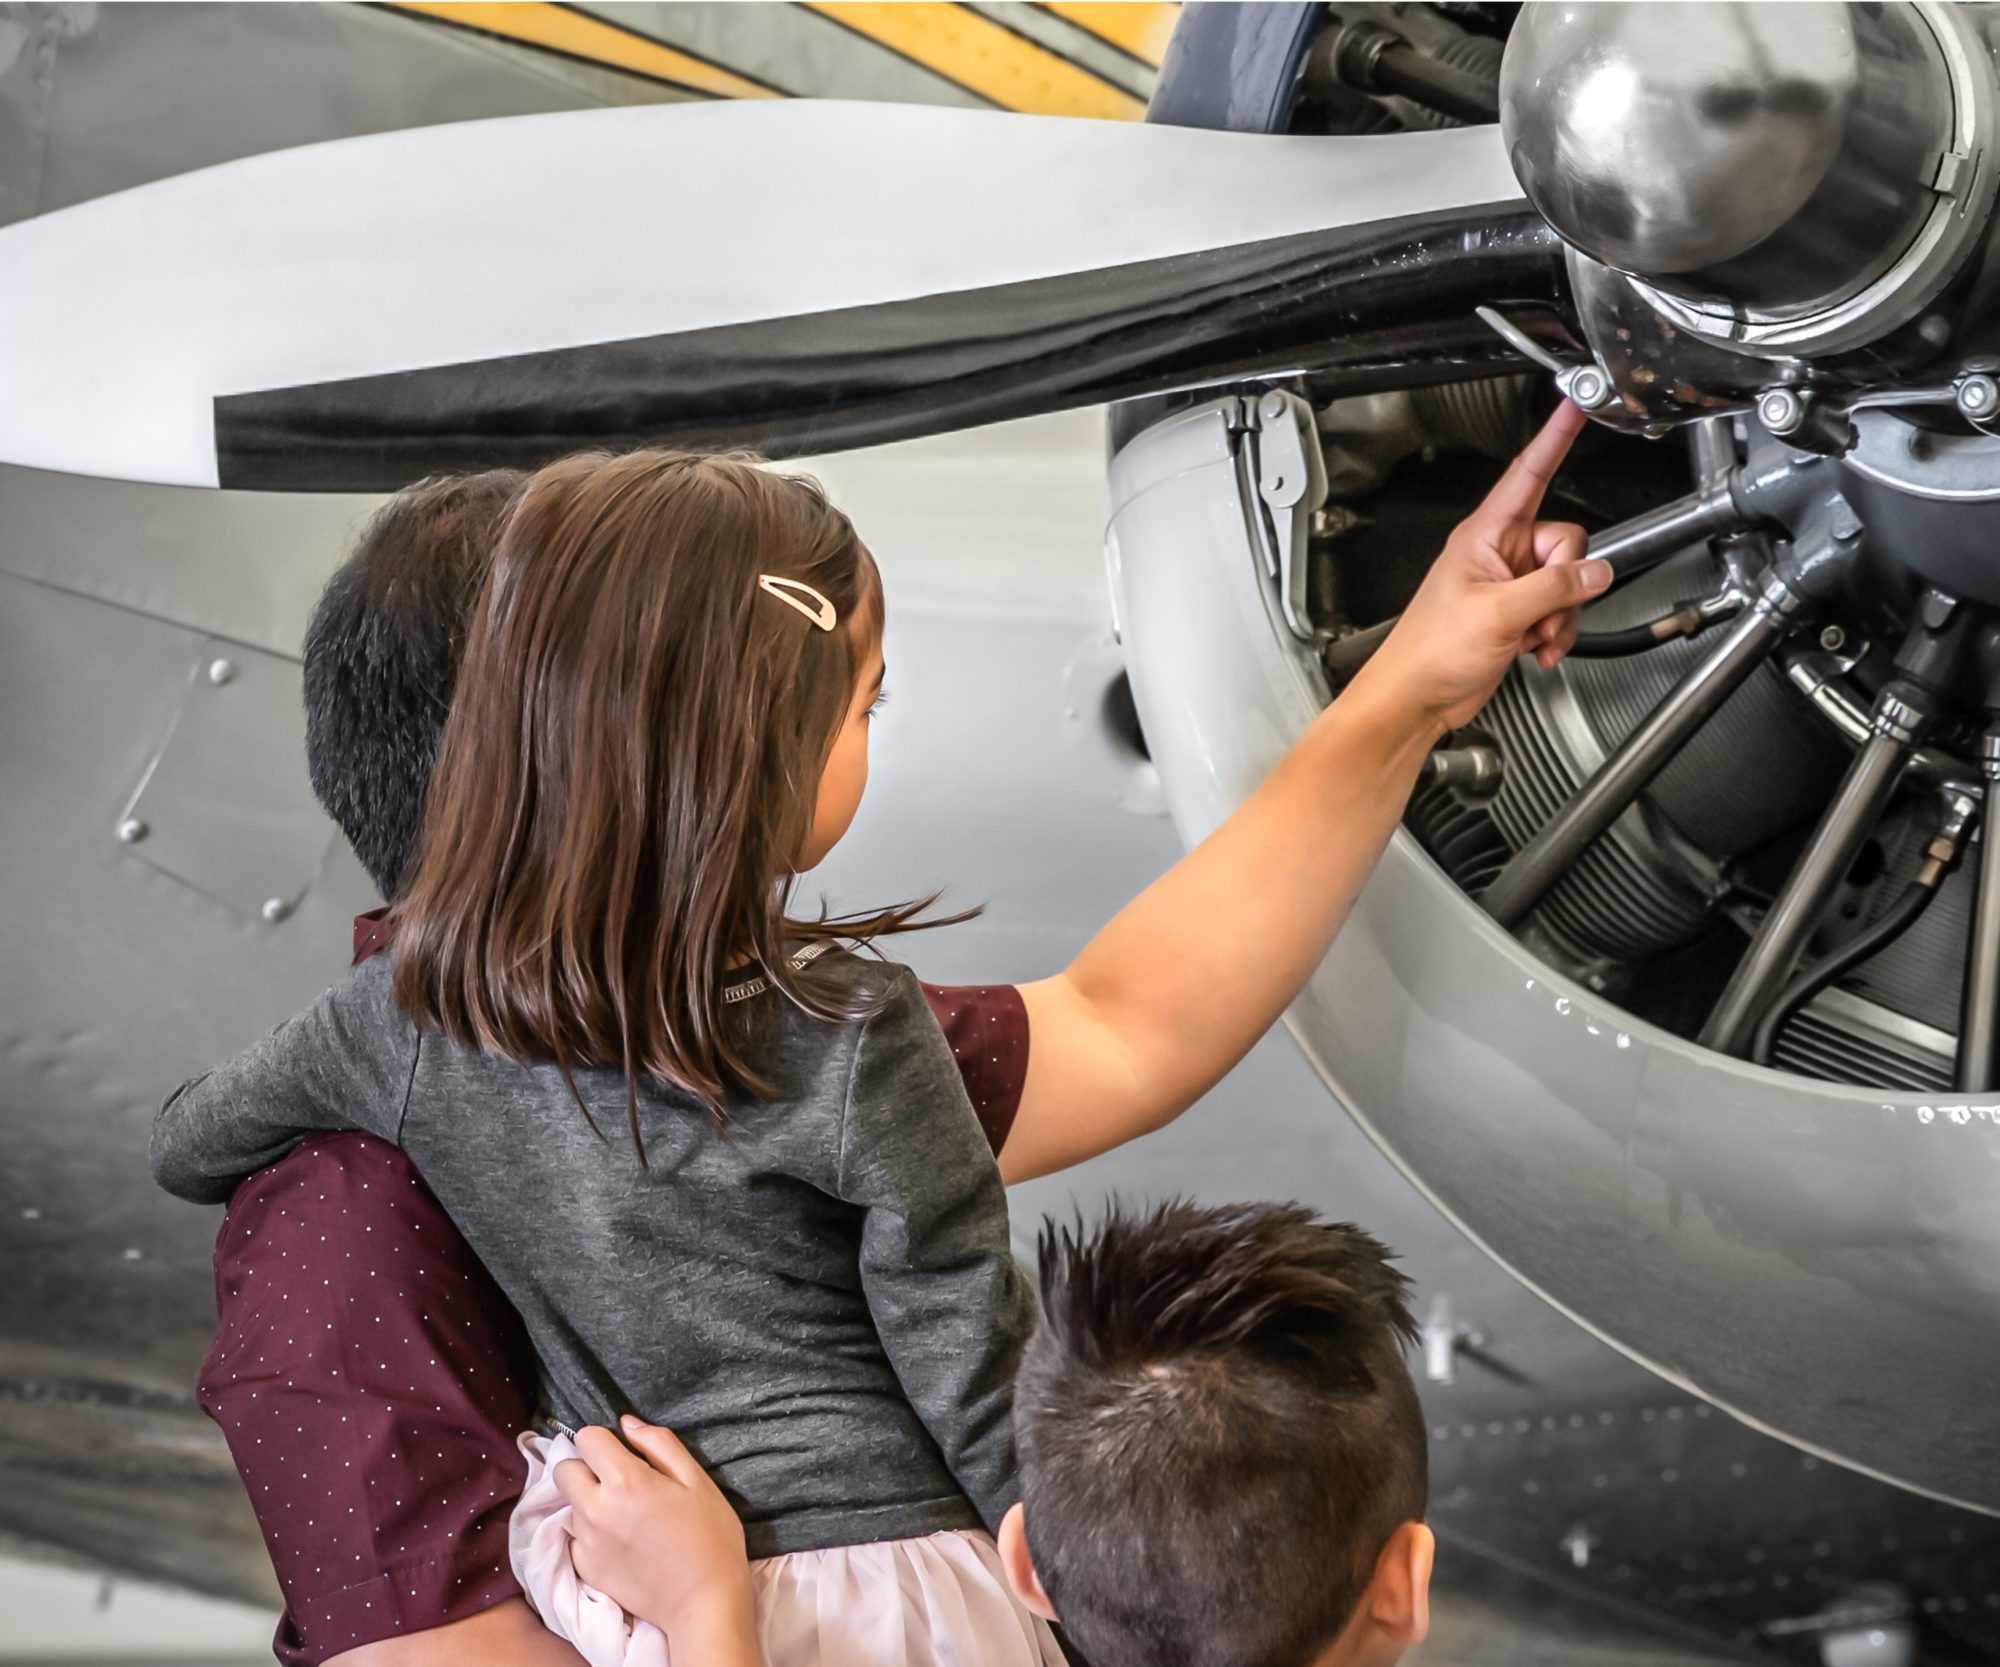 Hangar Flight Museum Gift Experience (Family Fun Calgary)